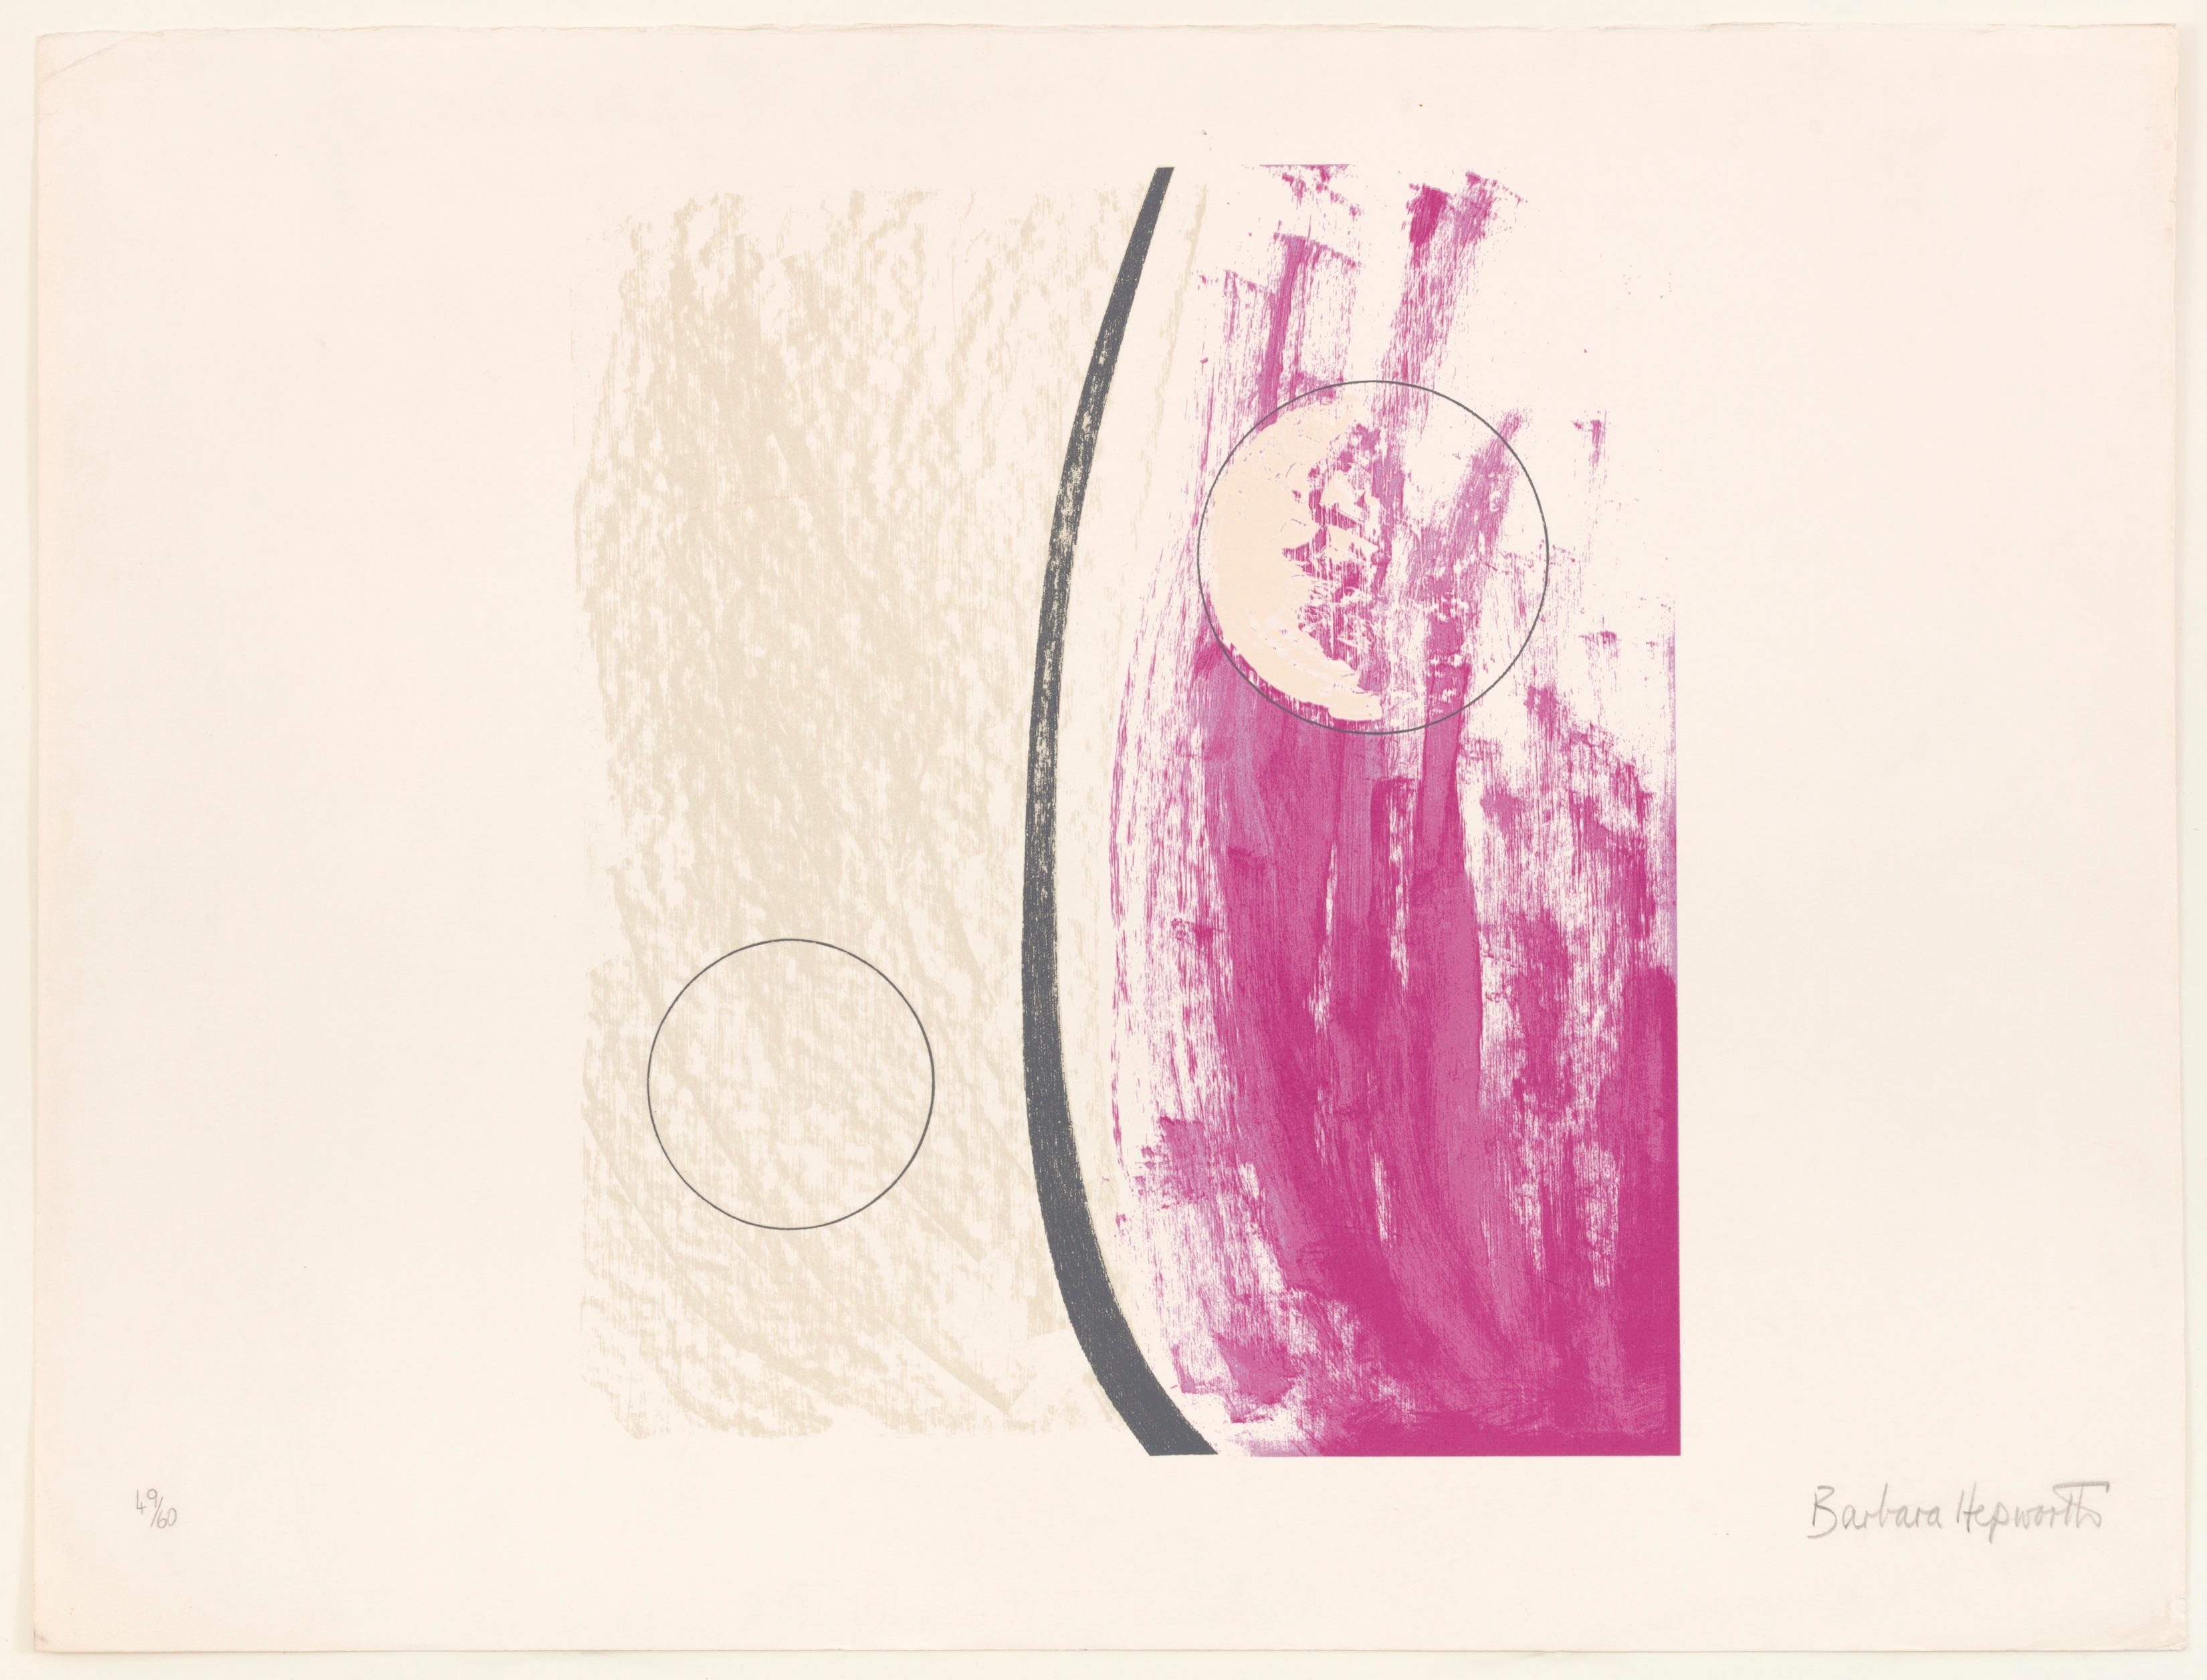 Barbara Hepworth Abstract Print - Orchid